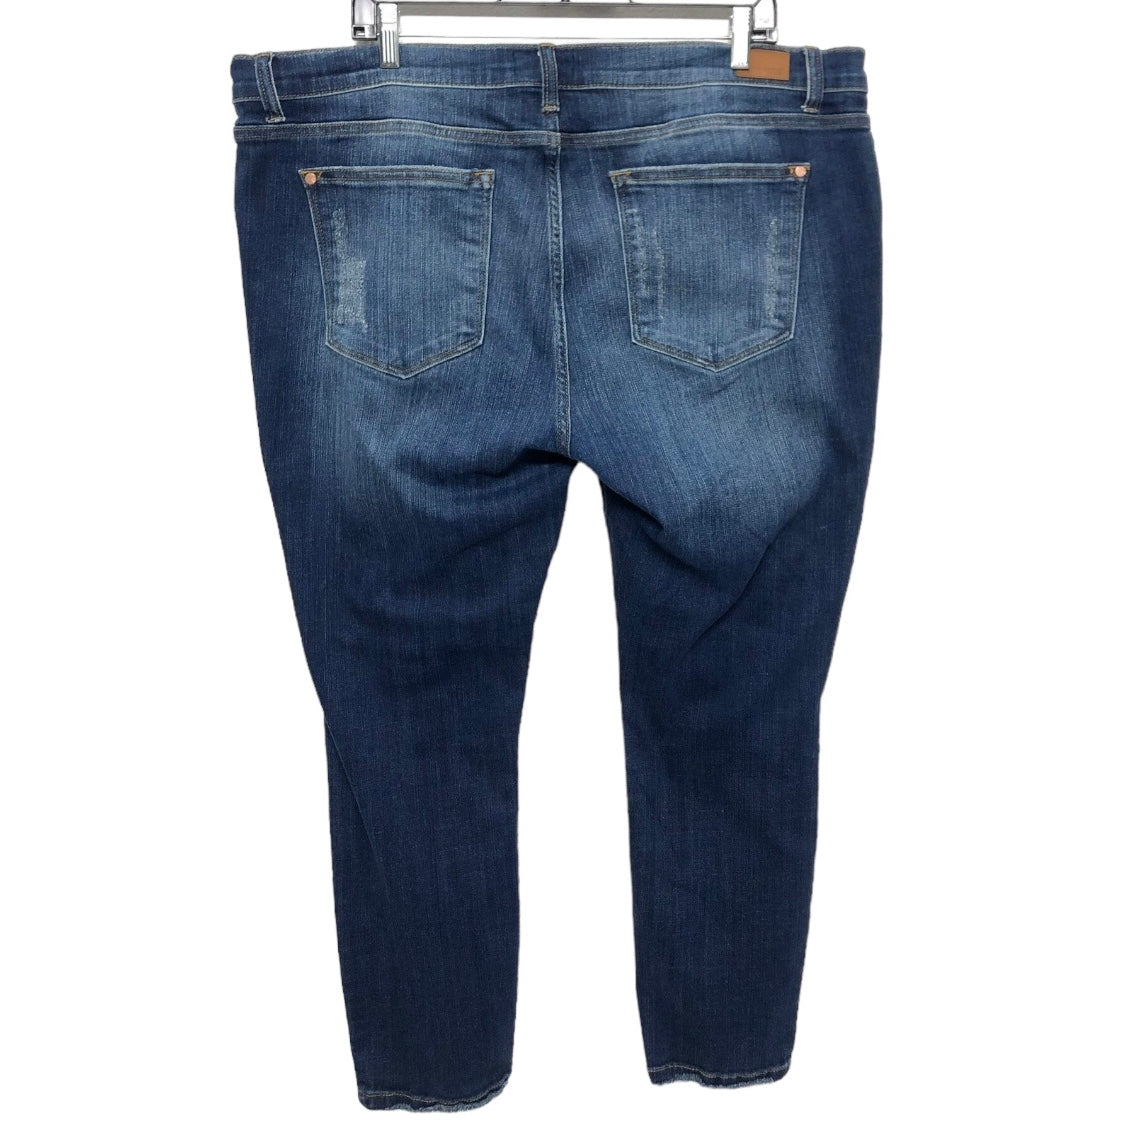 Blue Denim Jeans Skinny Judy Blue, Size 3x